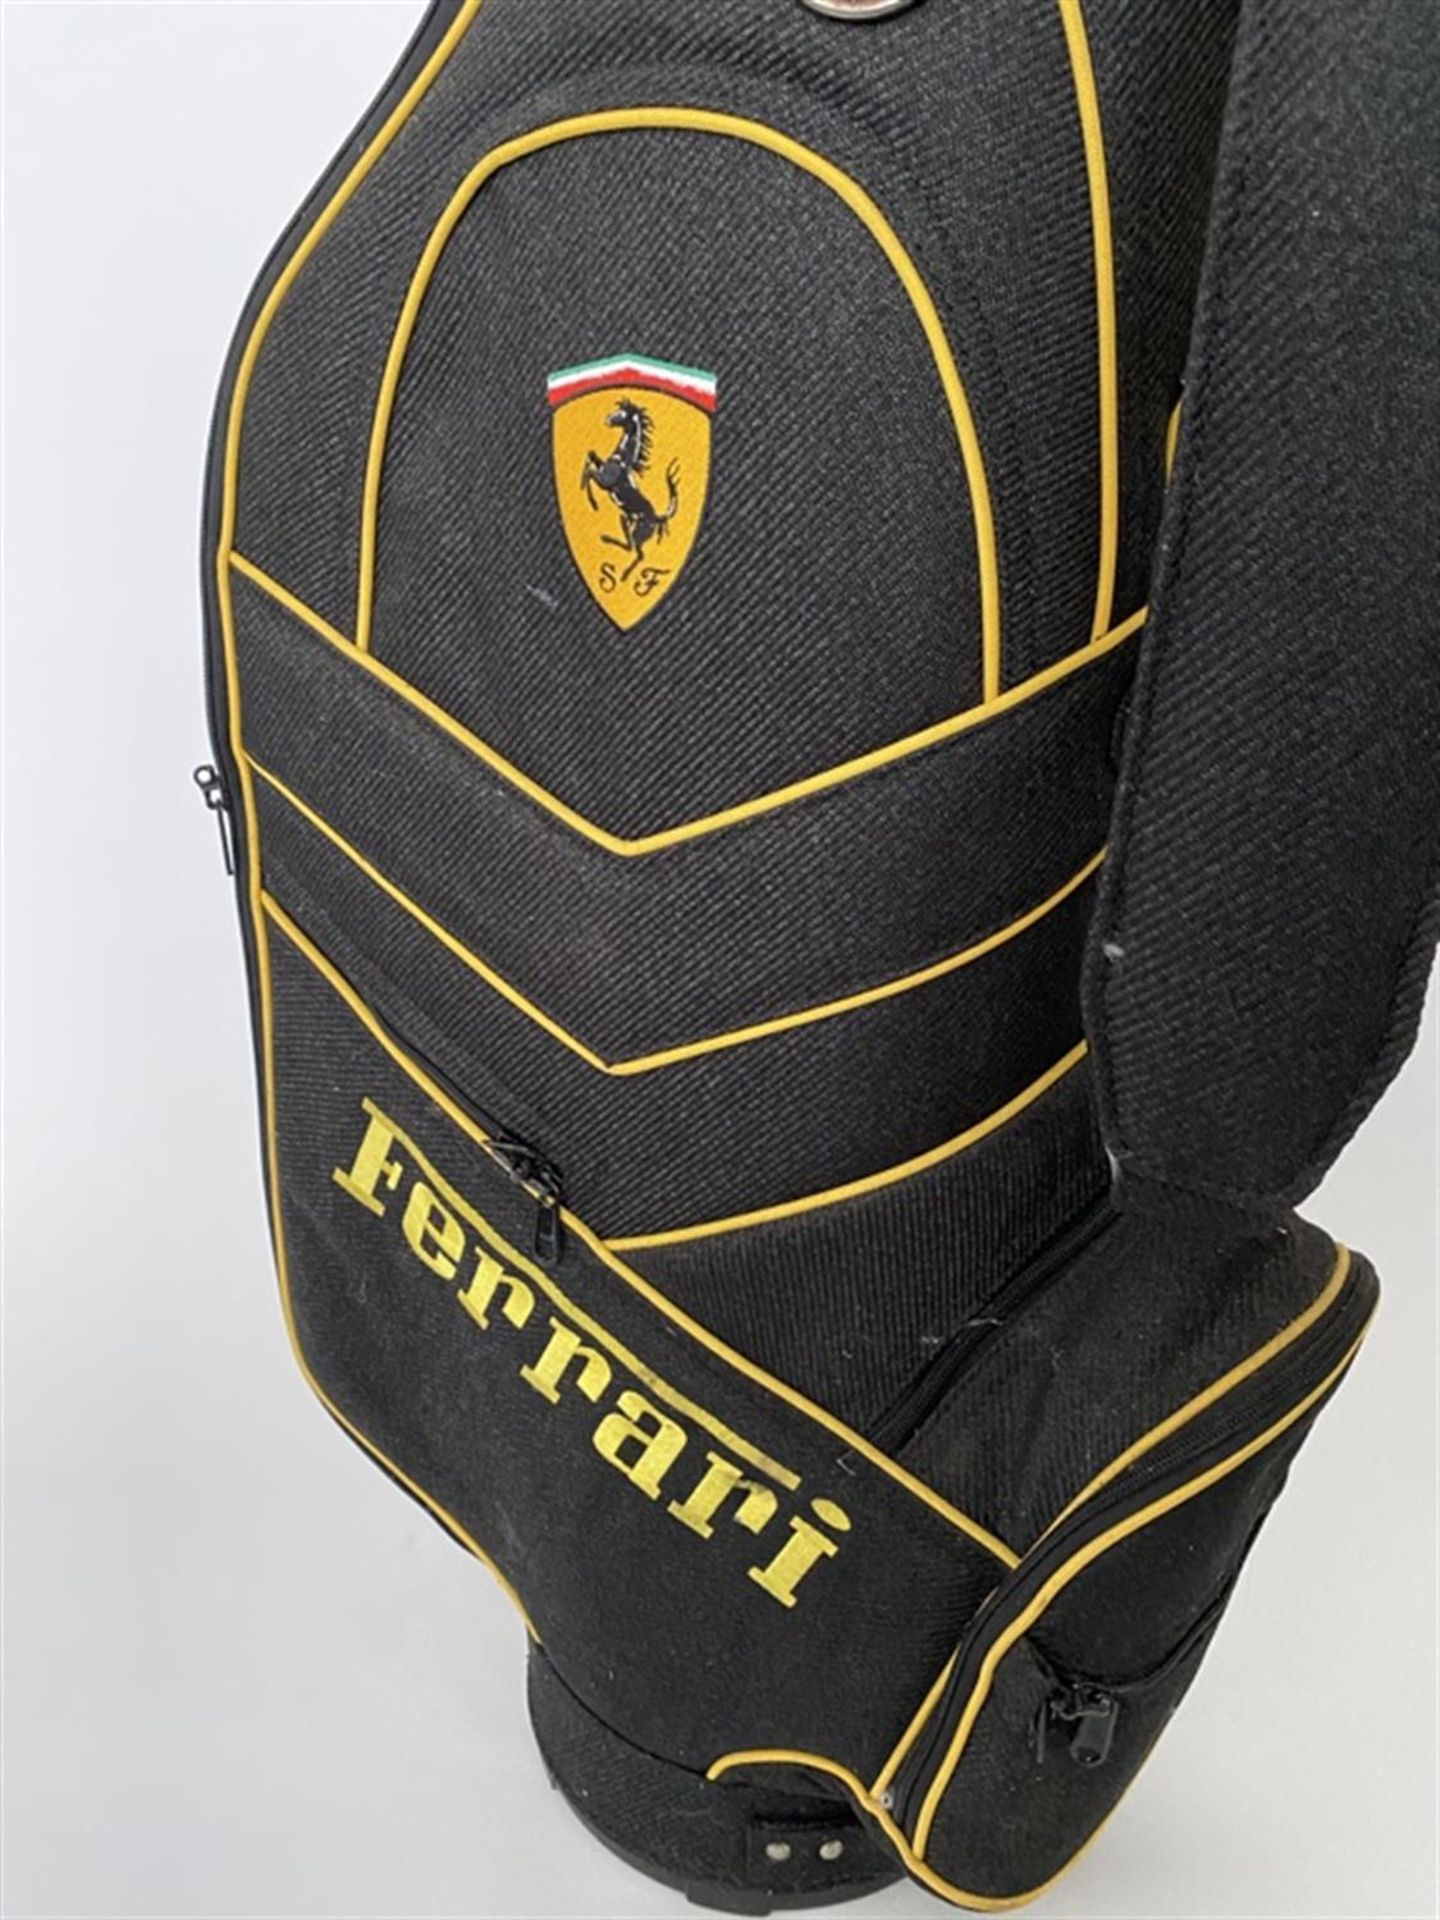 Brand New Golf Cart Bag with Ferrari Logo - Image 6 of 7